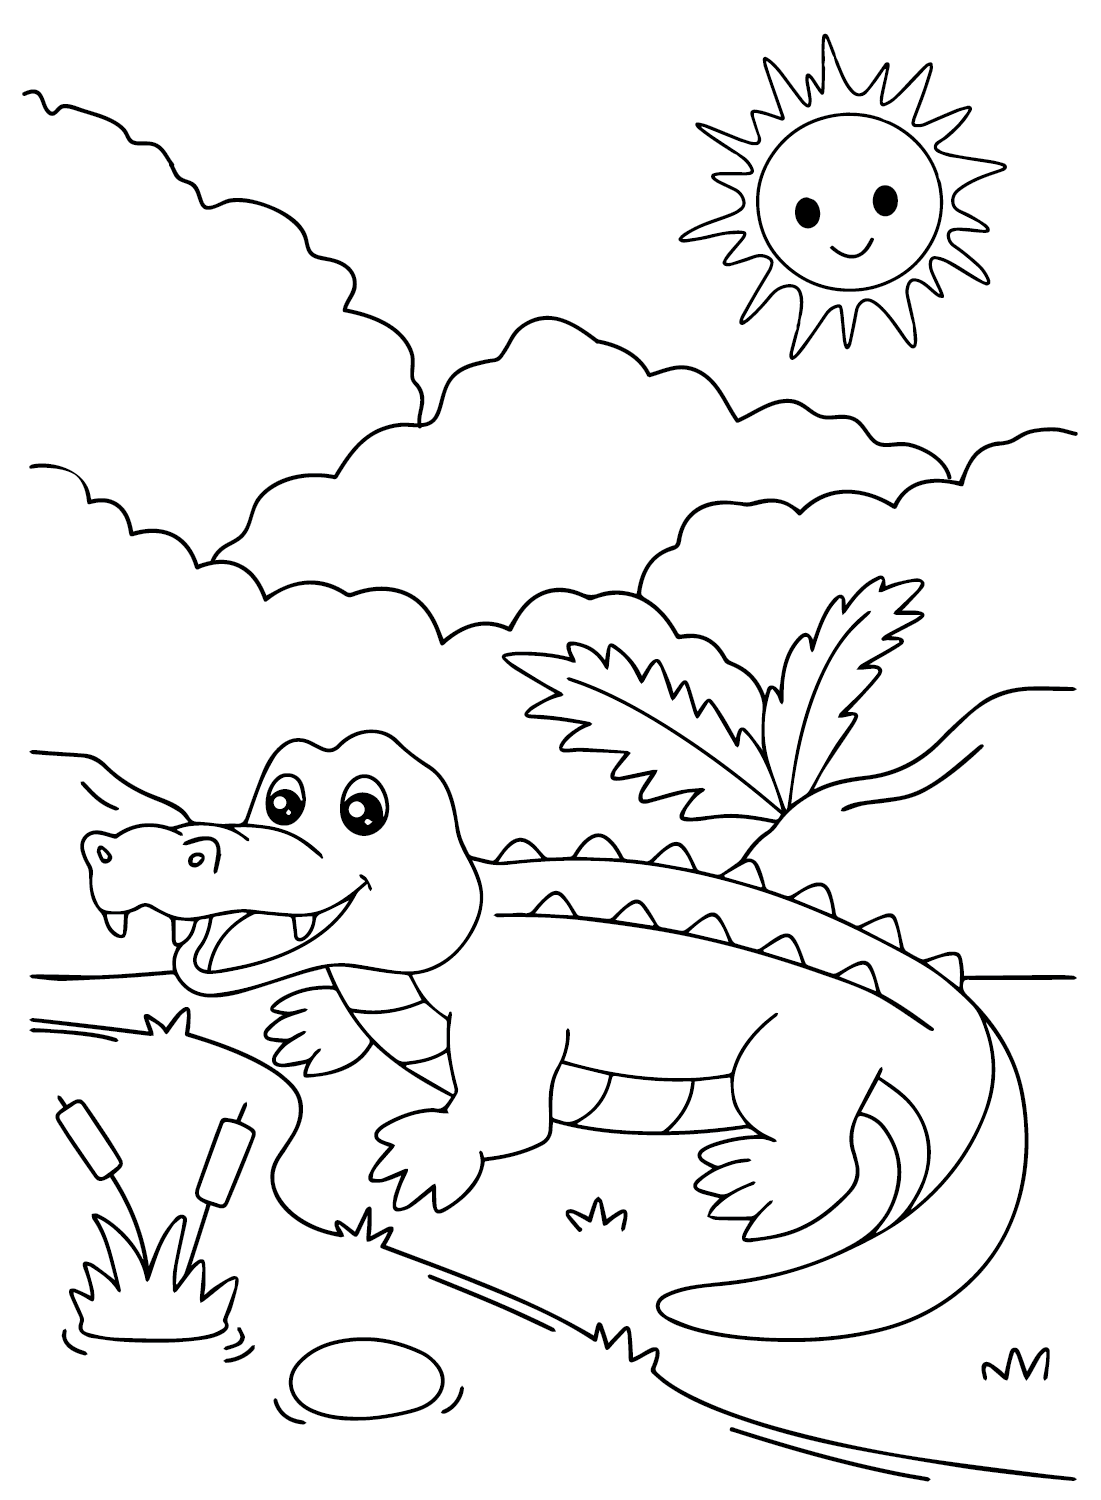 Crocodile to Print Coloring Page